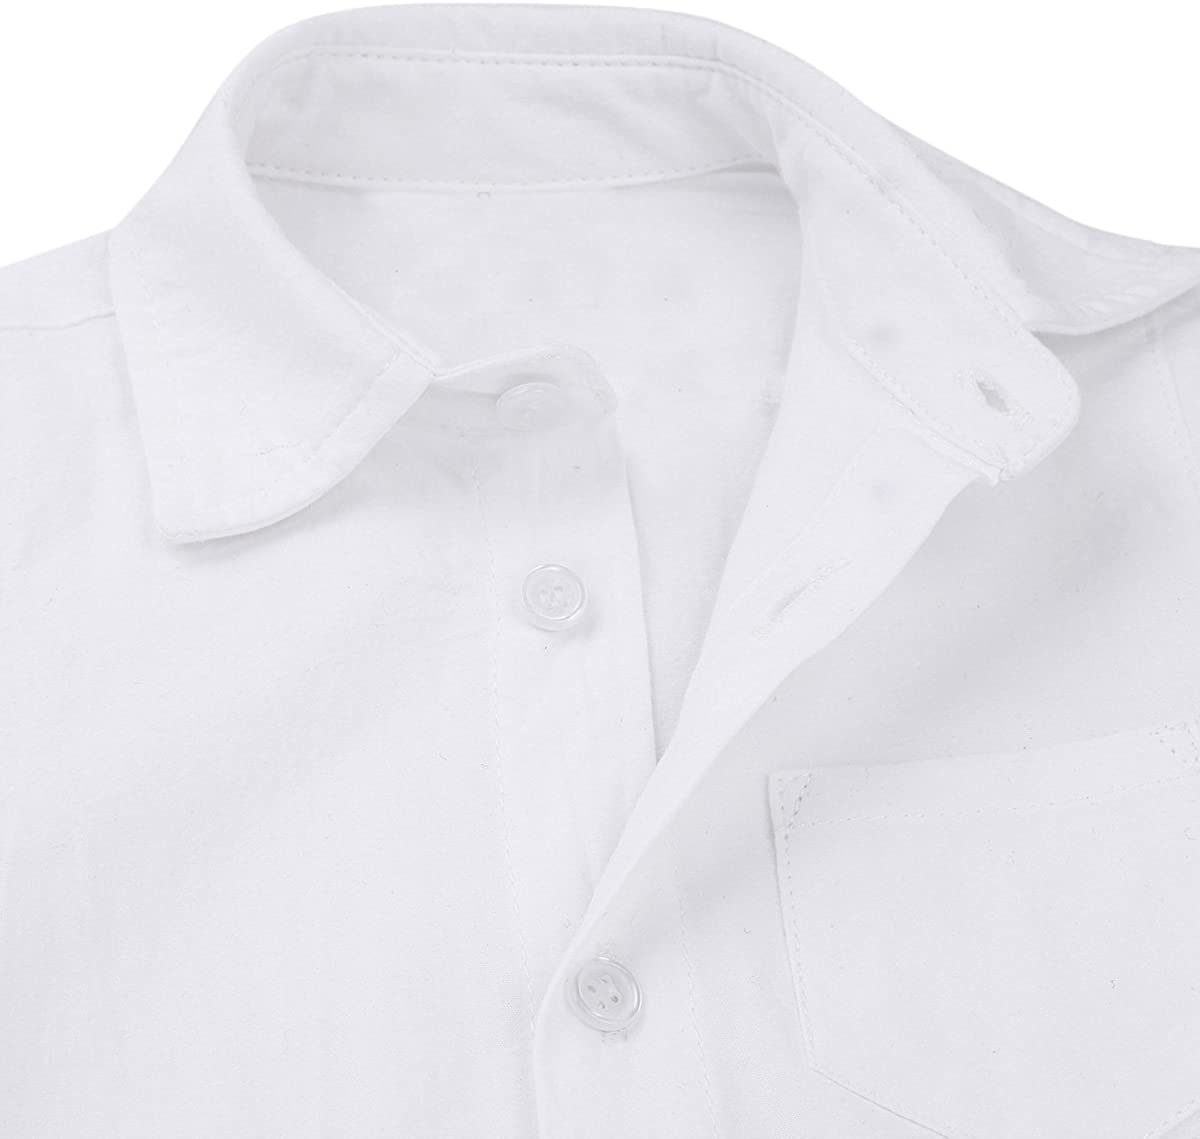 iiniim Baby Boys Collared Long Sleeve Formal Dress Shirt, White, Size 3 ...